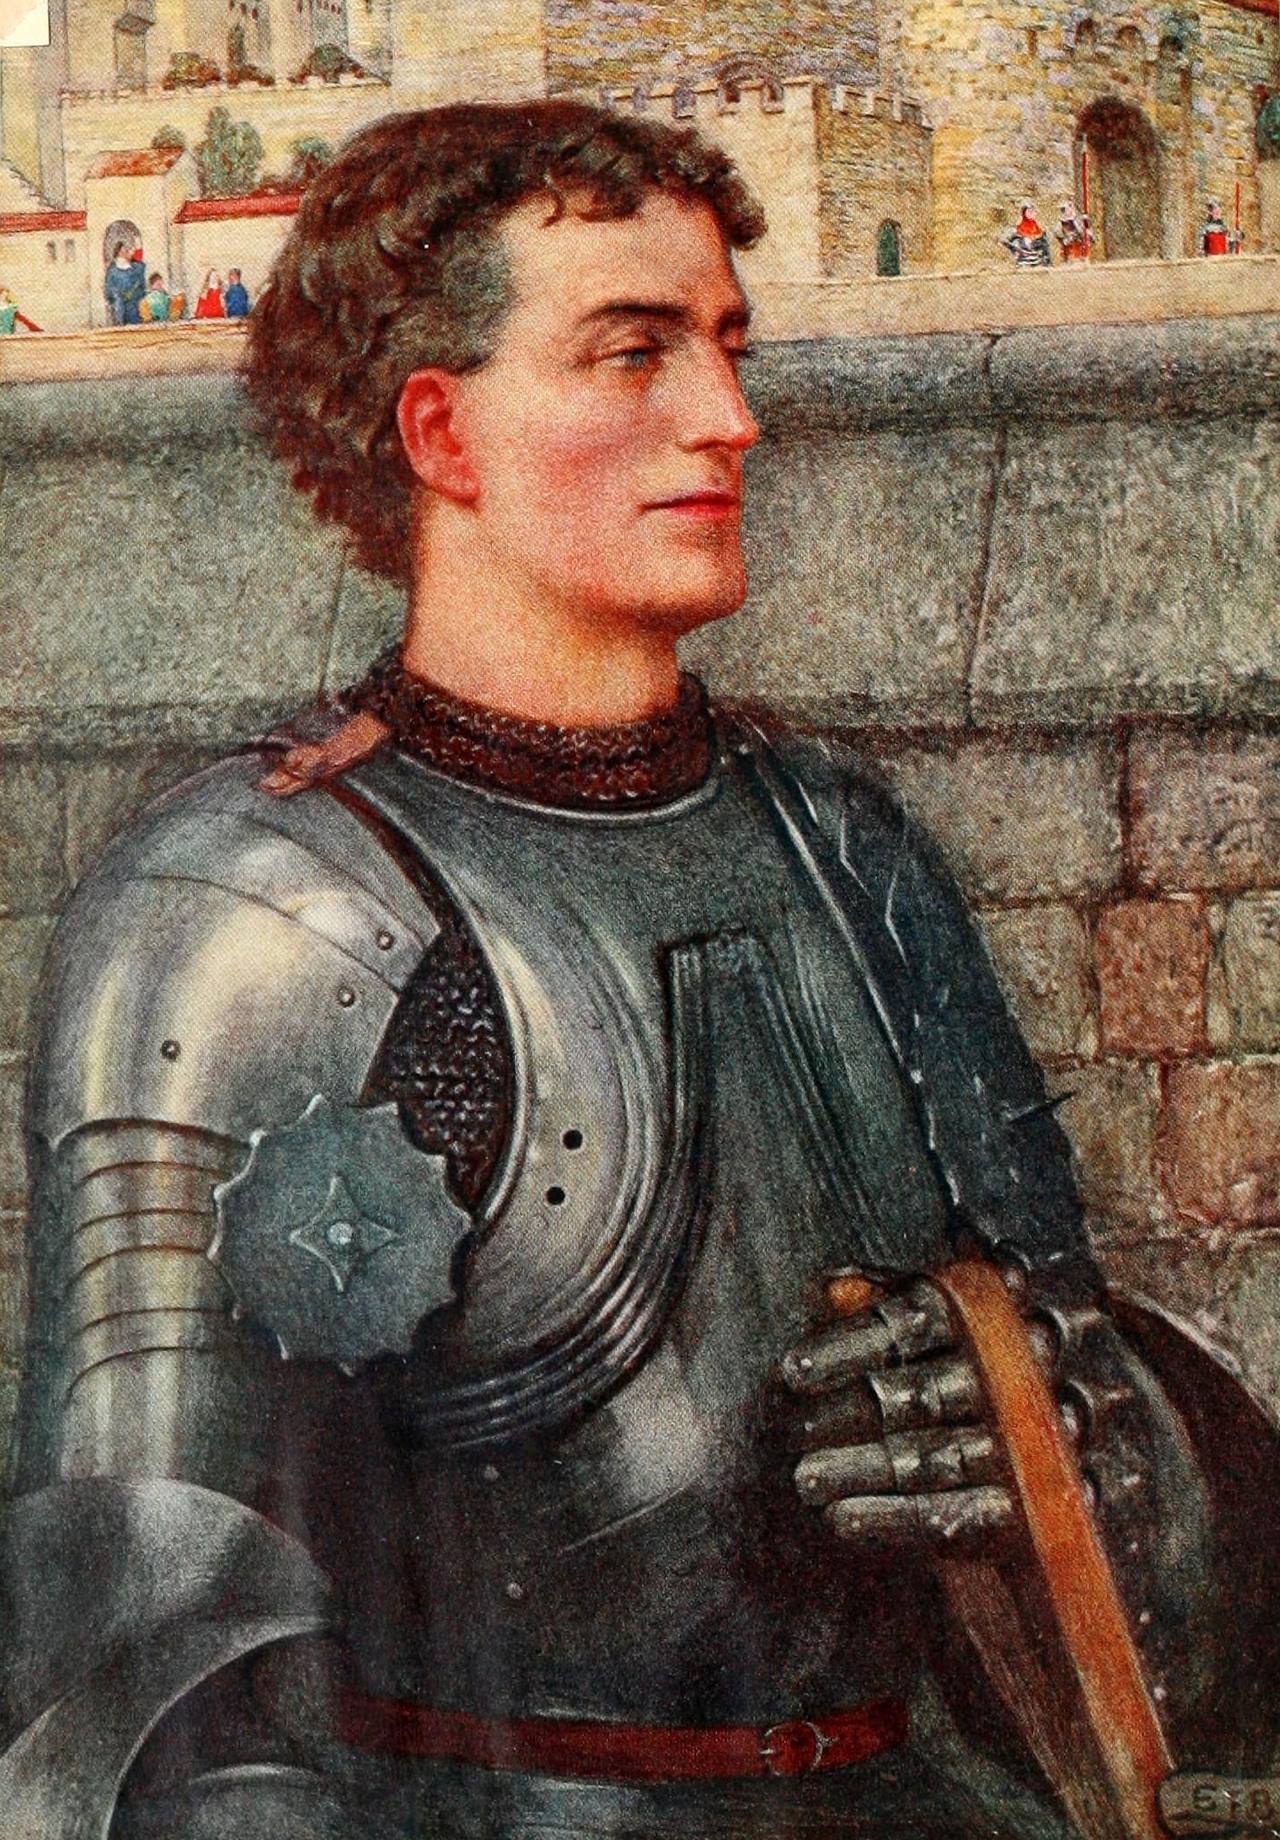 Sir Lancelot-Adam Ardrey-Sir William Marshal-Middle Ages-Greatest Knight-King Henry Richard John